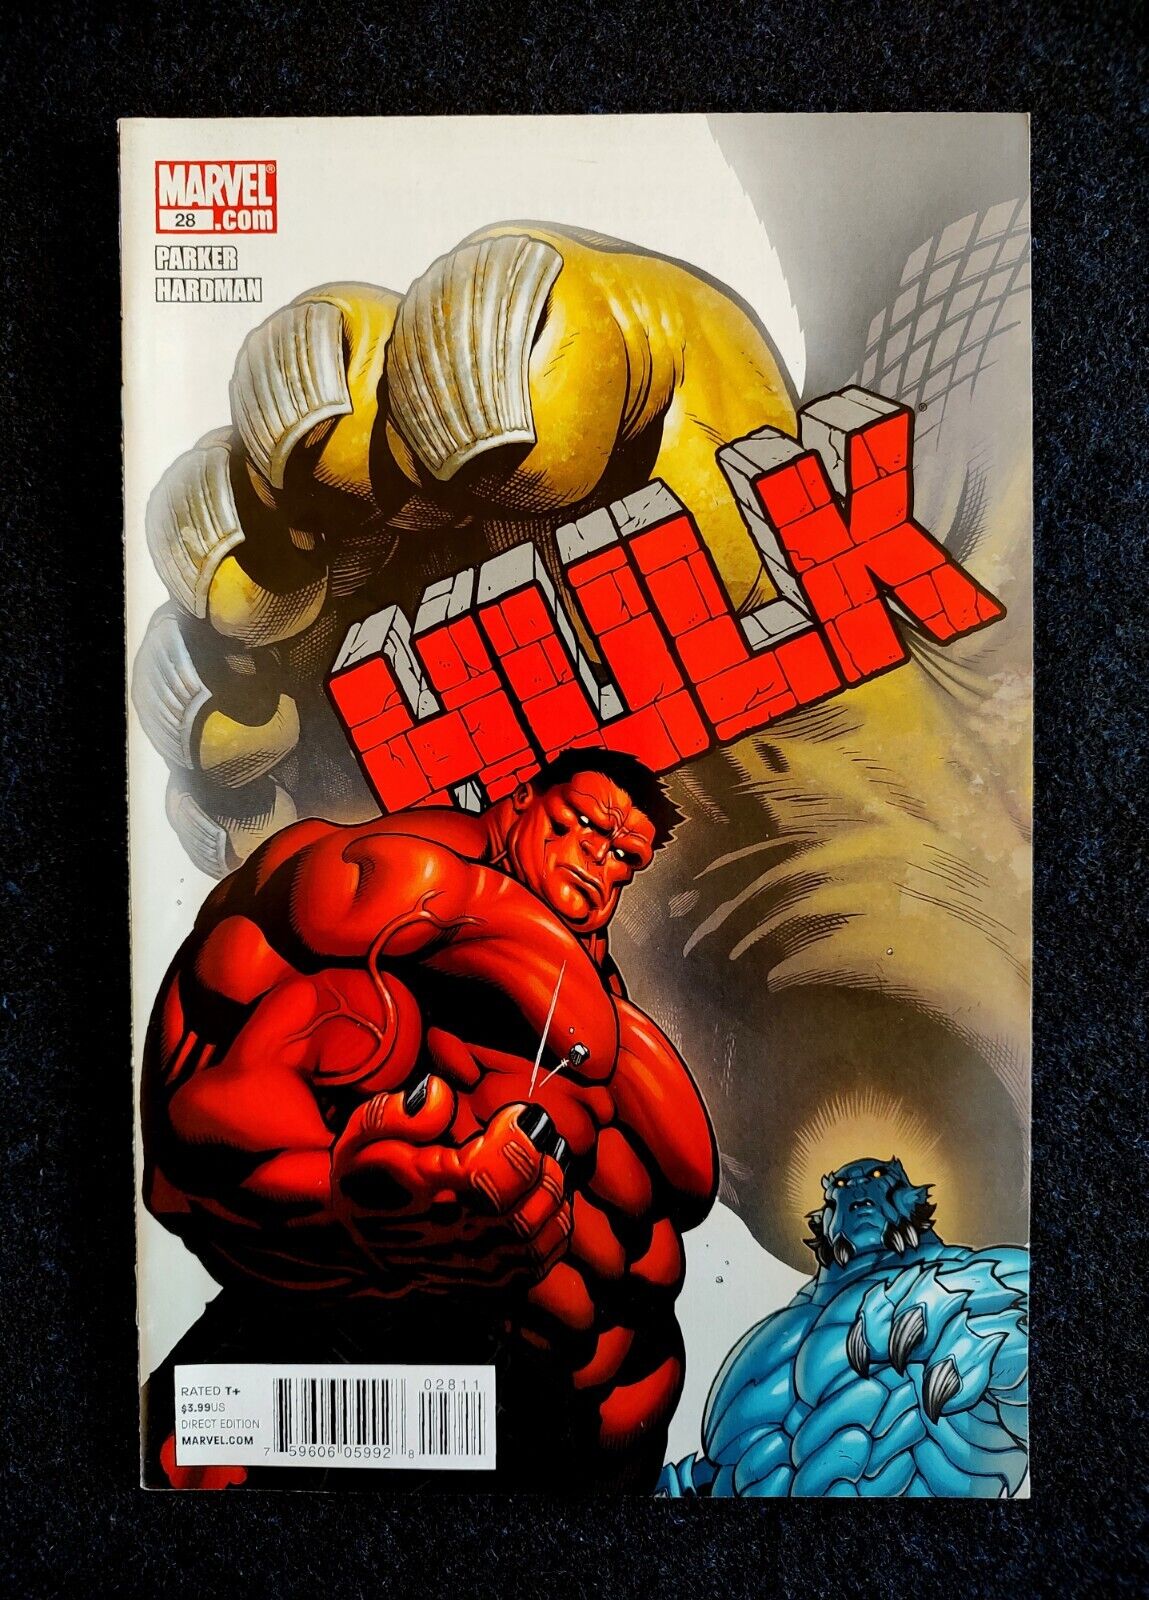 Hulk Issue #28 Marvel Comic Book MCU 2011 Jeff Parker, Gabriel Hardman.